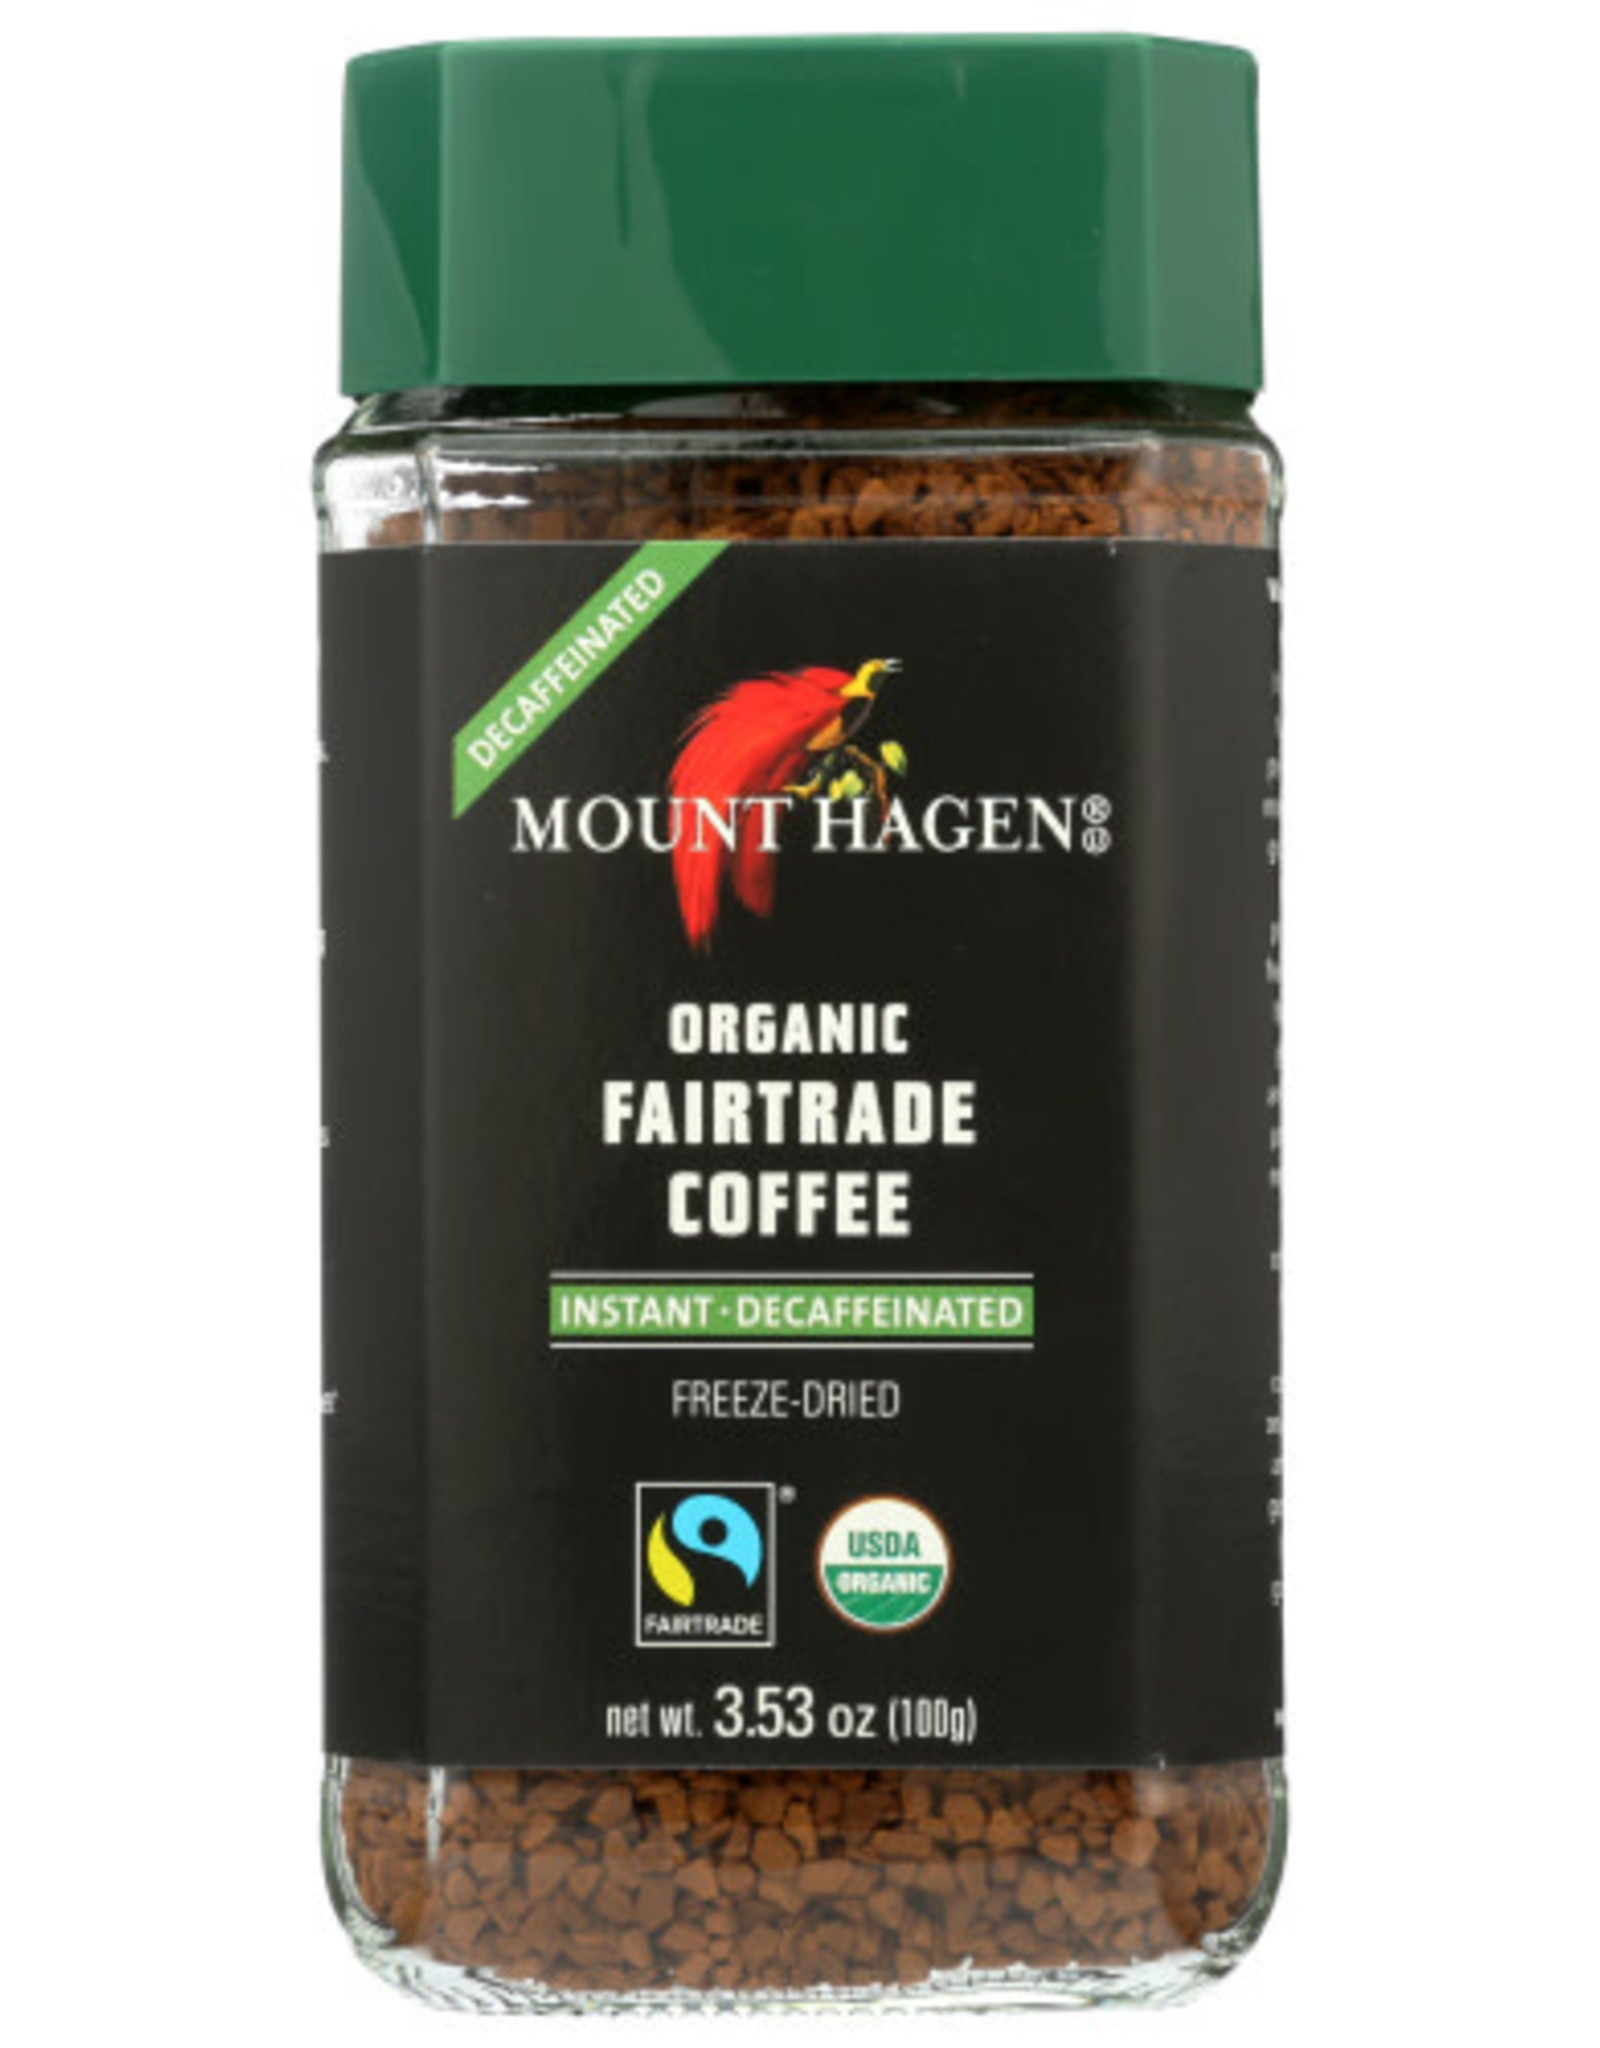 MOUNT HAGEN MOUNT HAGEN ORGANIC FAIRTRADE INSTANT DECAFFEINATED COFFEE, 3.53 OZ.